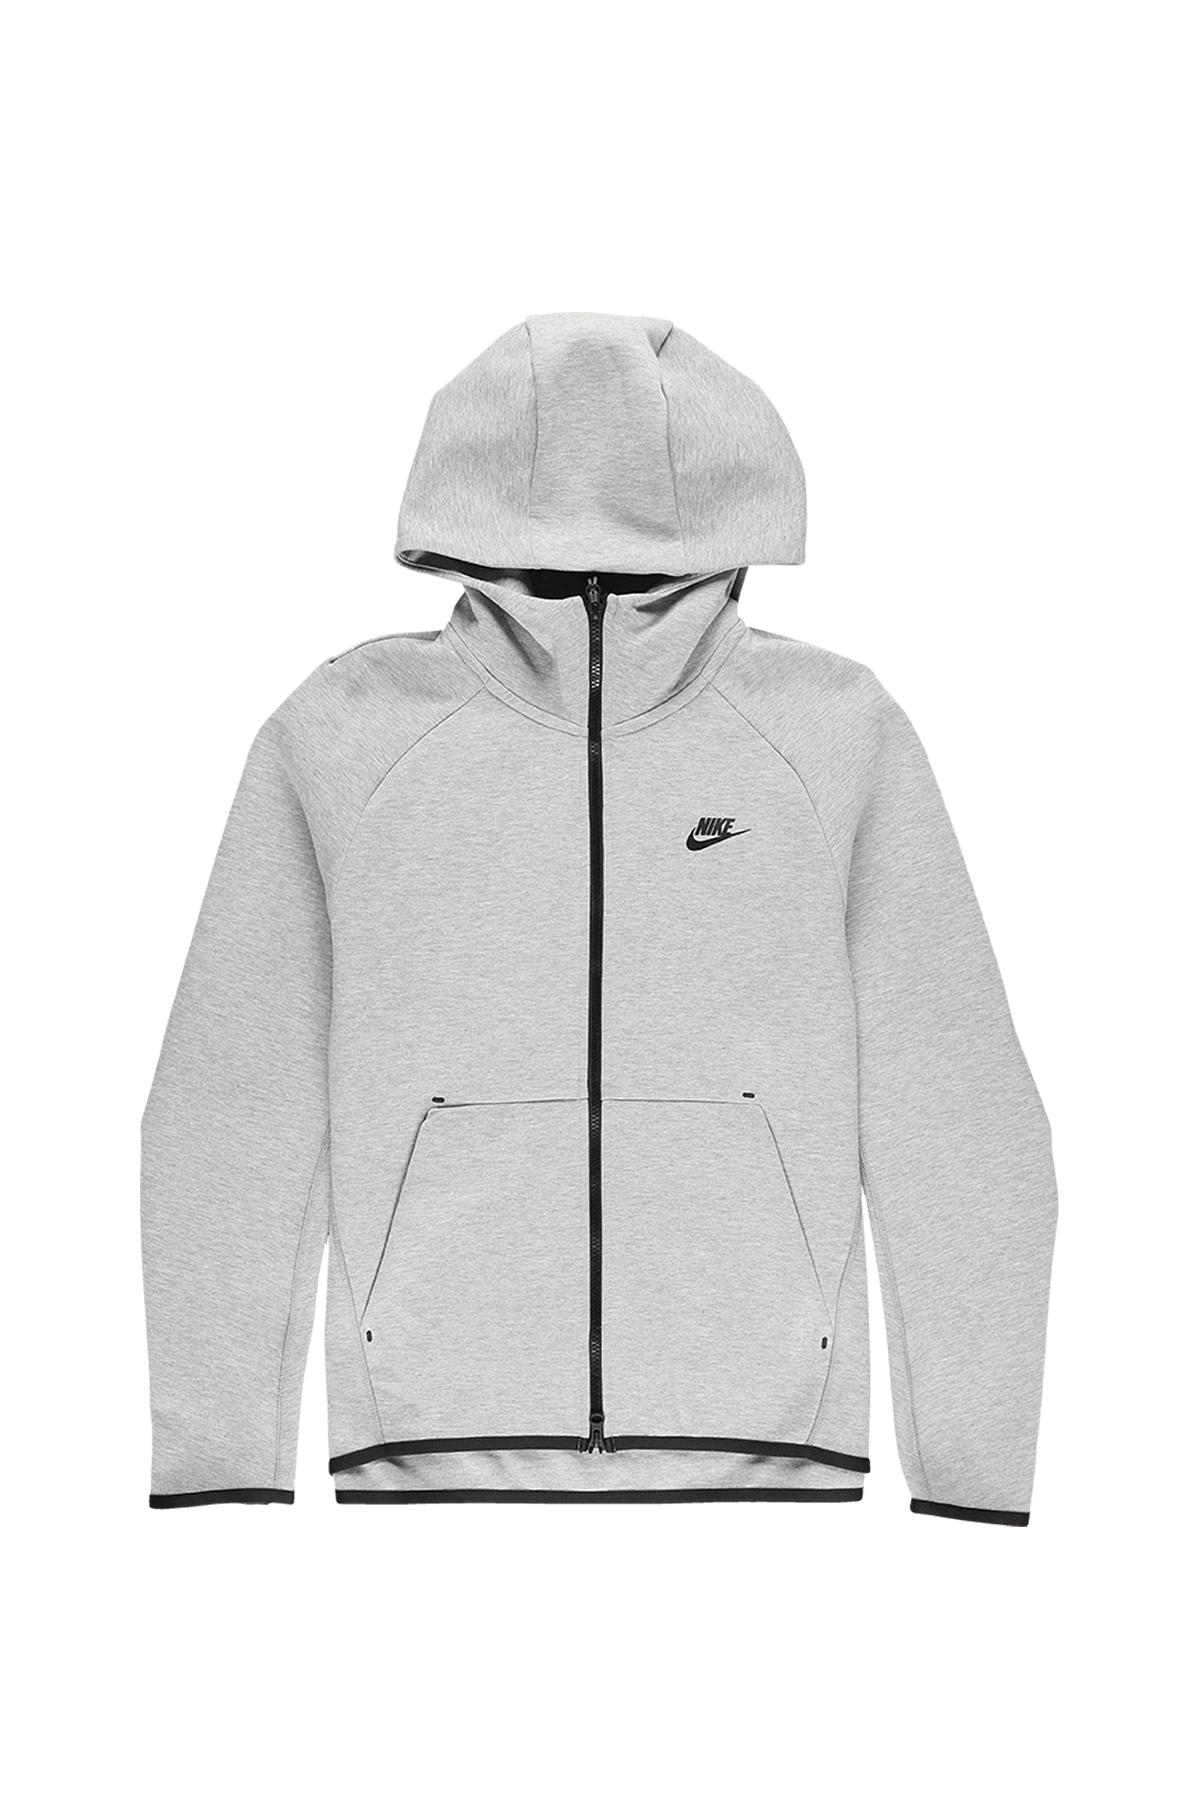 Nike Tech Fleece Full-zip Hoodie in Dark Grey Heather/Black/White (Gray ...